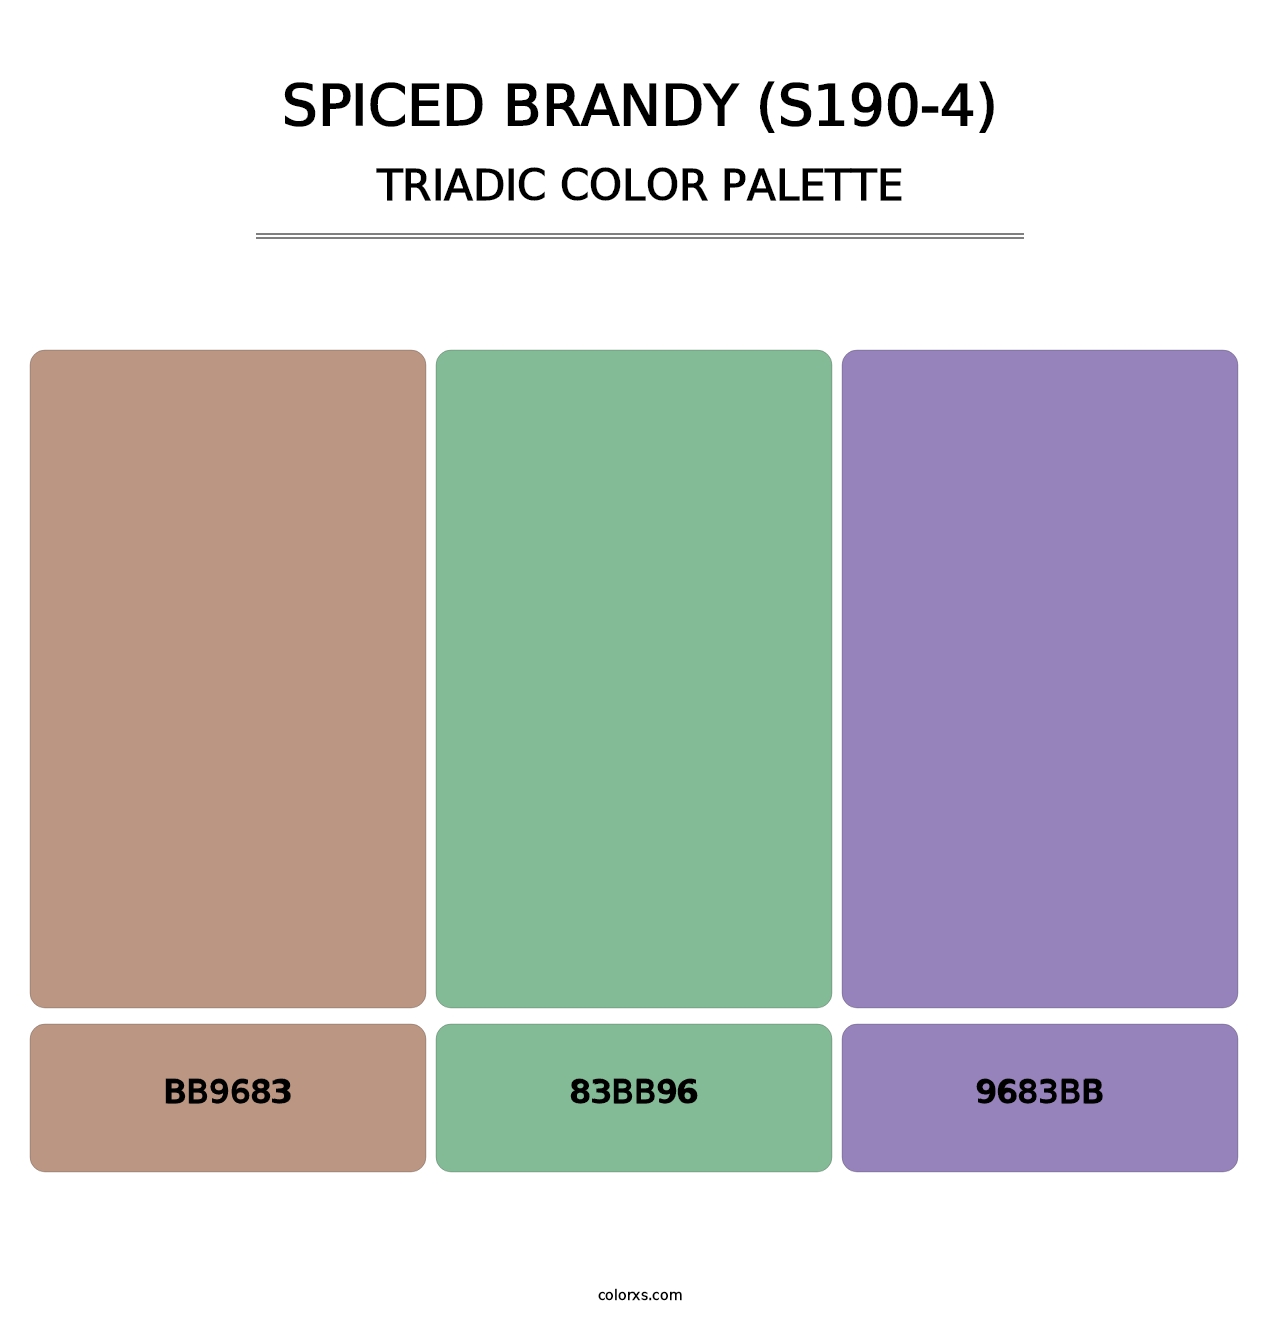 Spiced Brandy (S190-4) - Triadic Color Palette